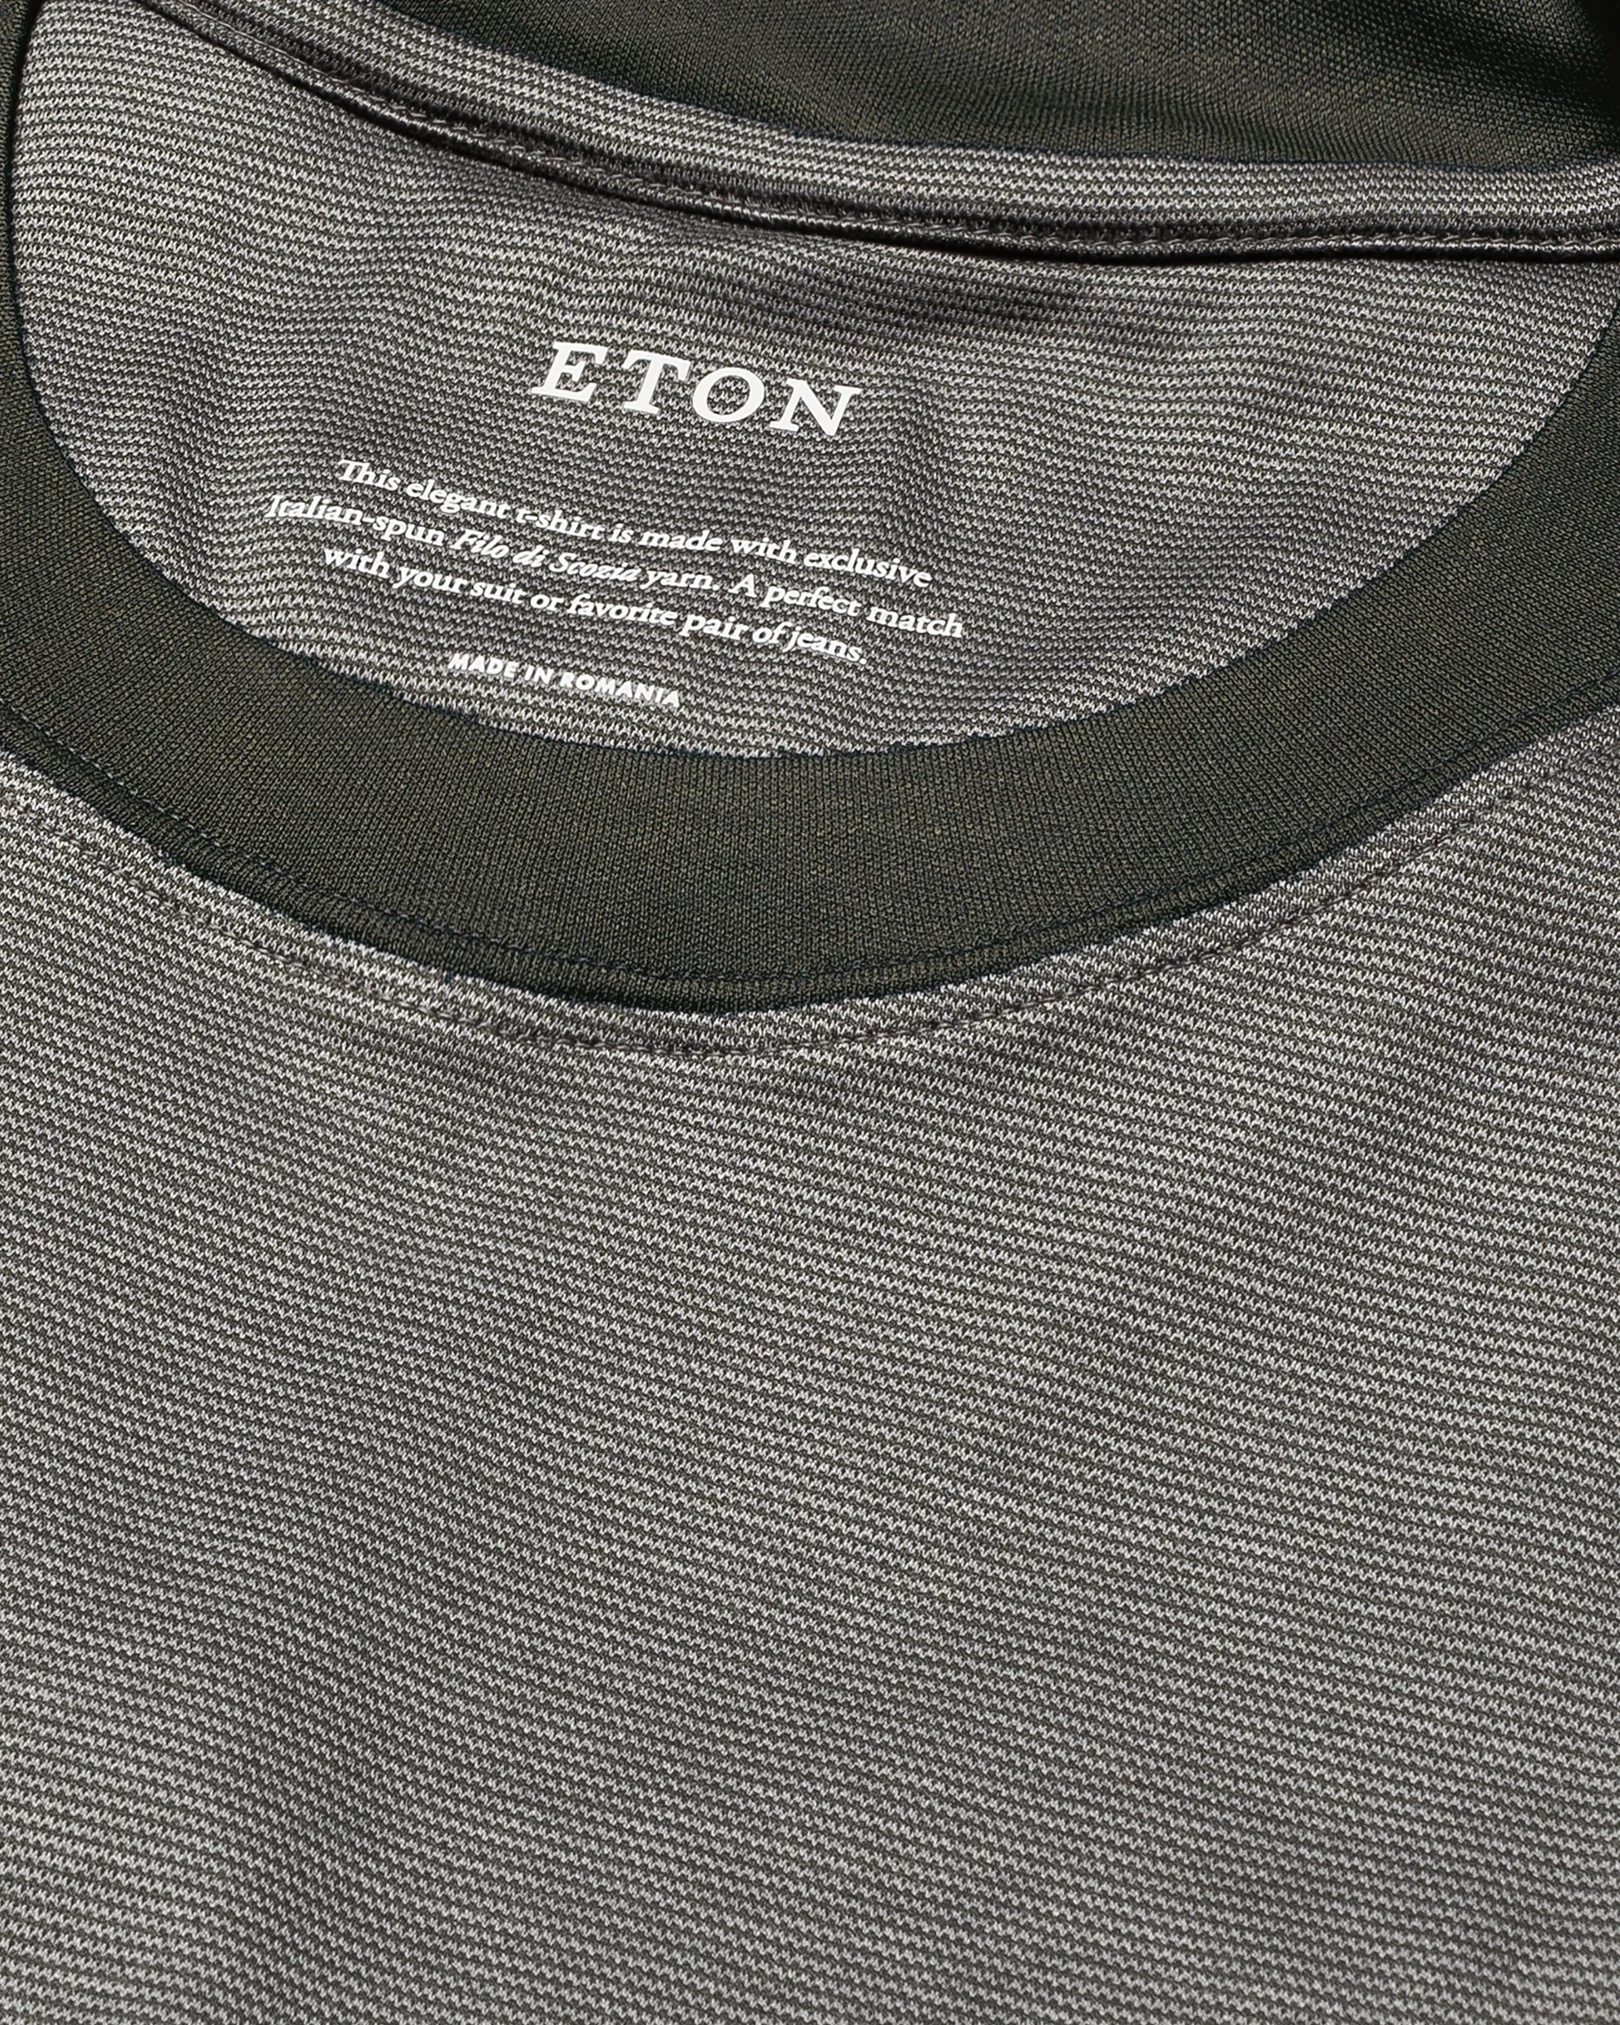 Eton - dark green interlock jersey